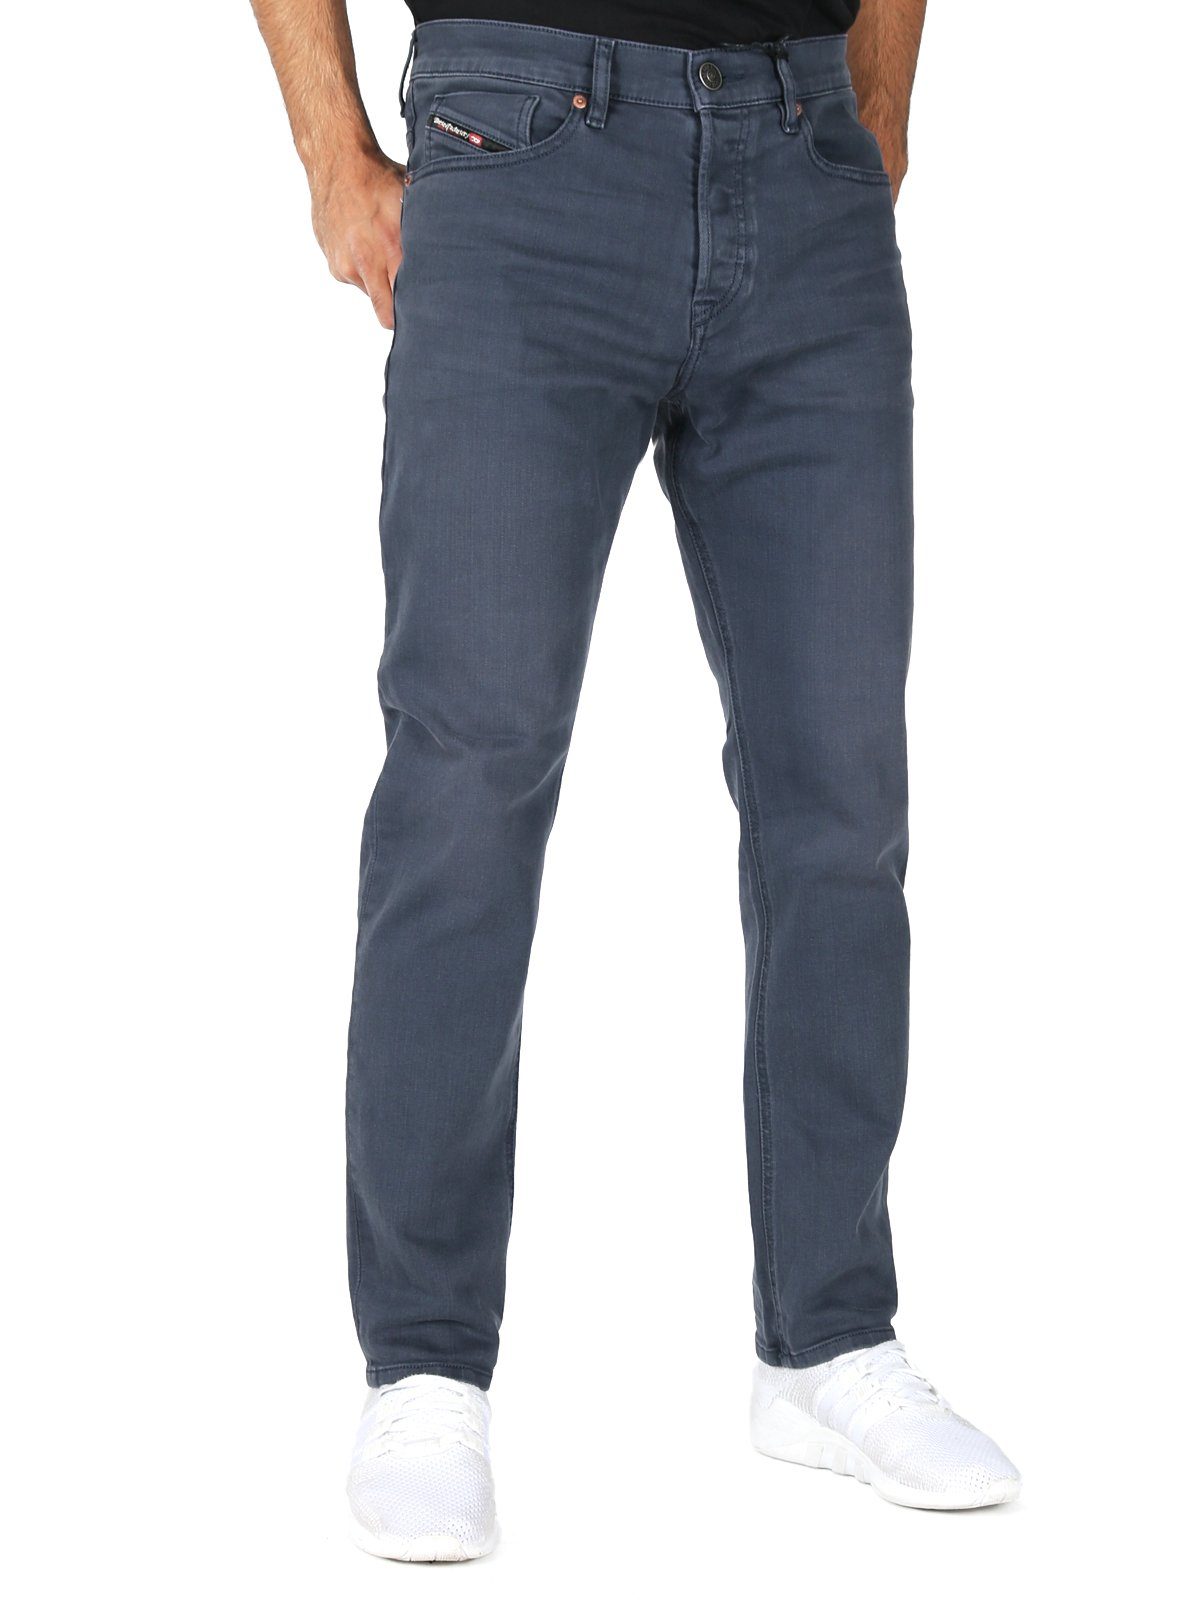 Dunkel 09A32 - Diesel Blau Stretch Tapered-fit-Jeans D-Fining - Knöchellange Hose